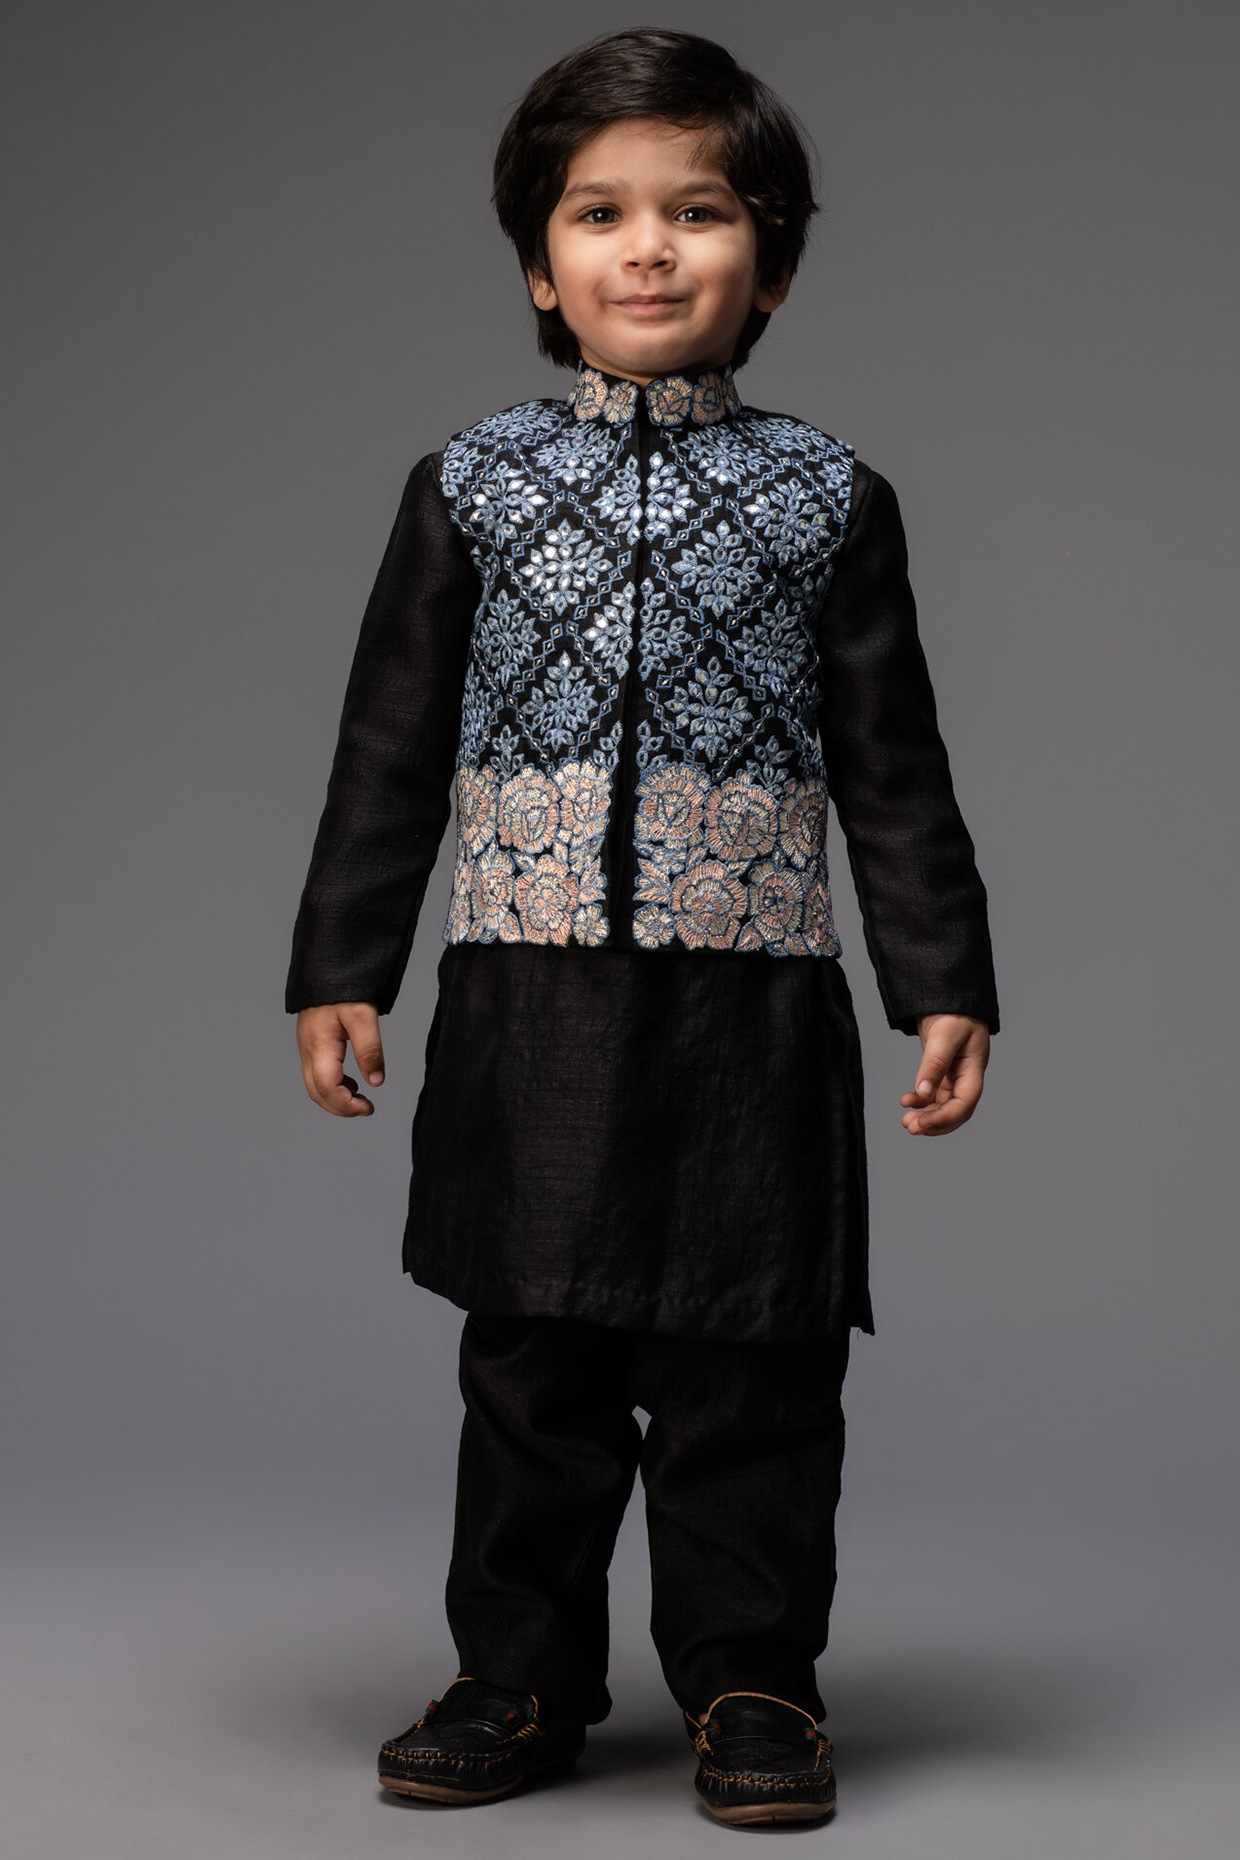 Buy TS Lifestyle Men's Black Kurta Pyjama With Jacquard Nehru Jacket Set  for Party. at Amazon.in